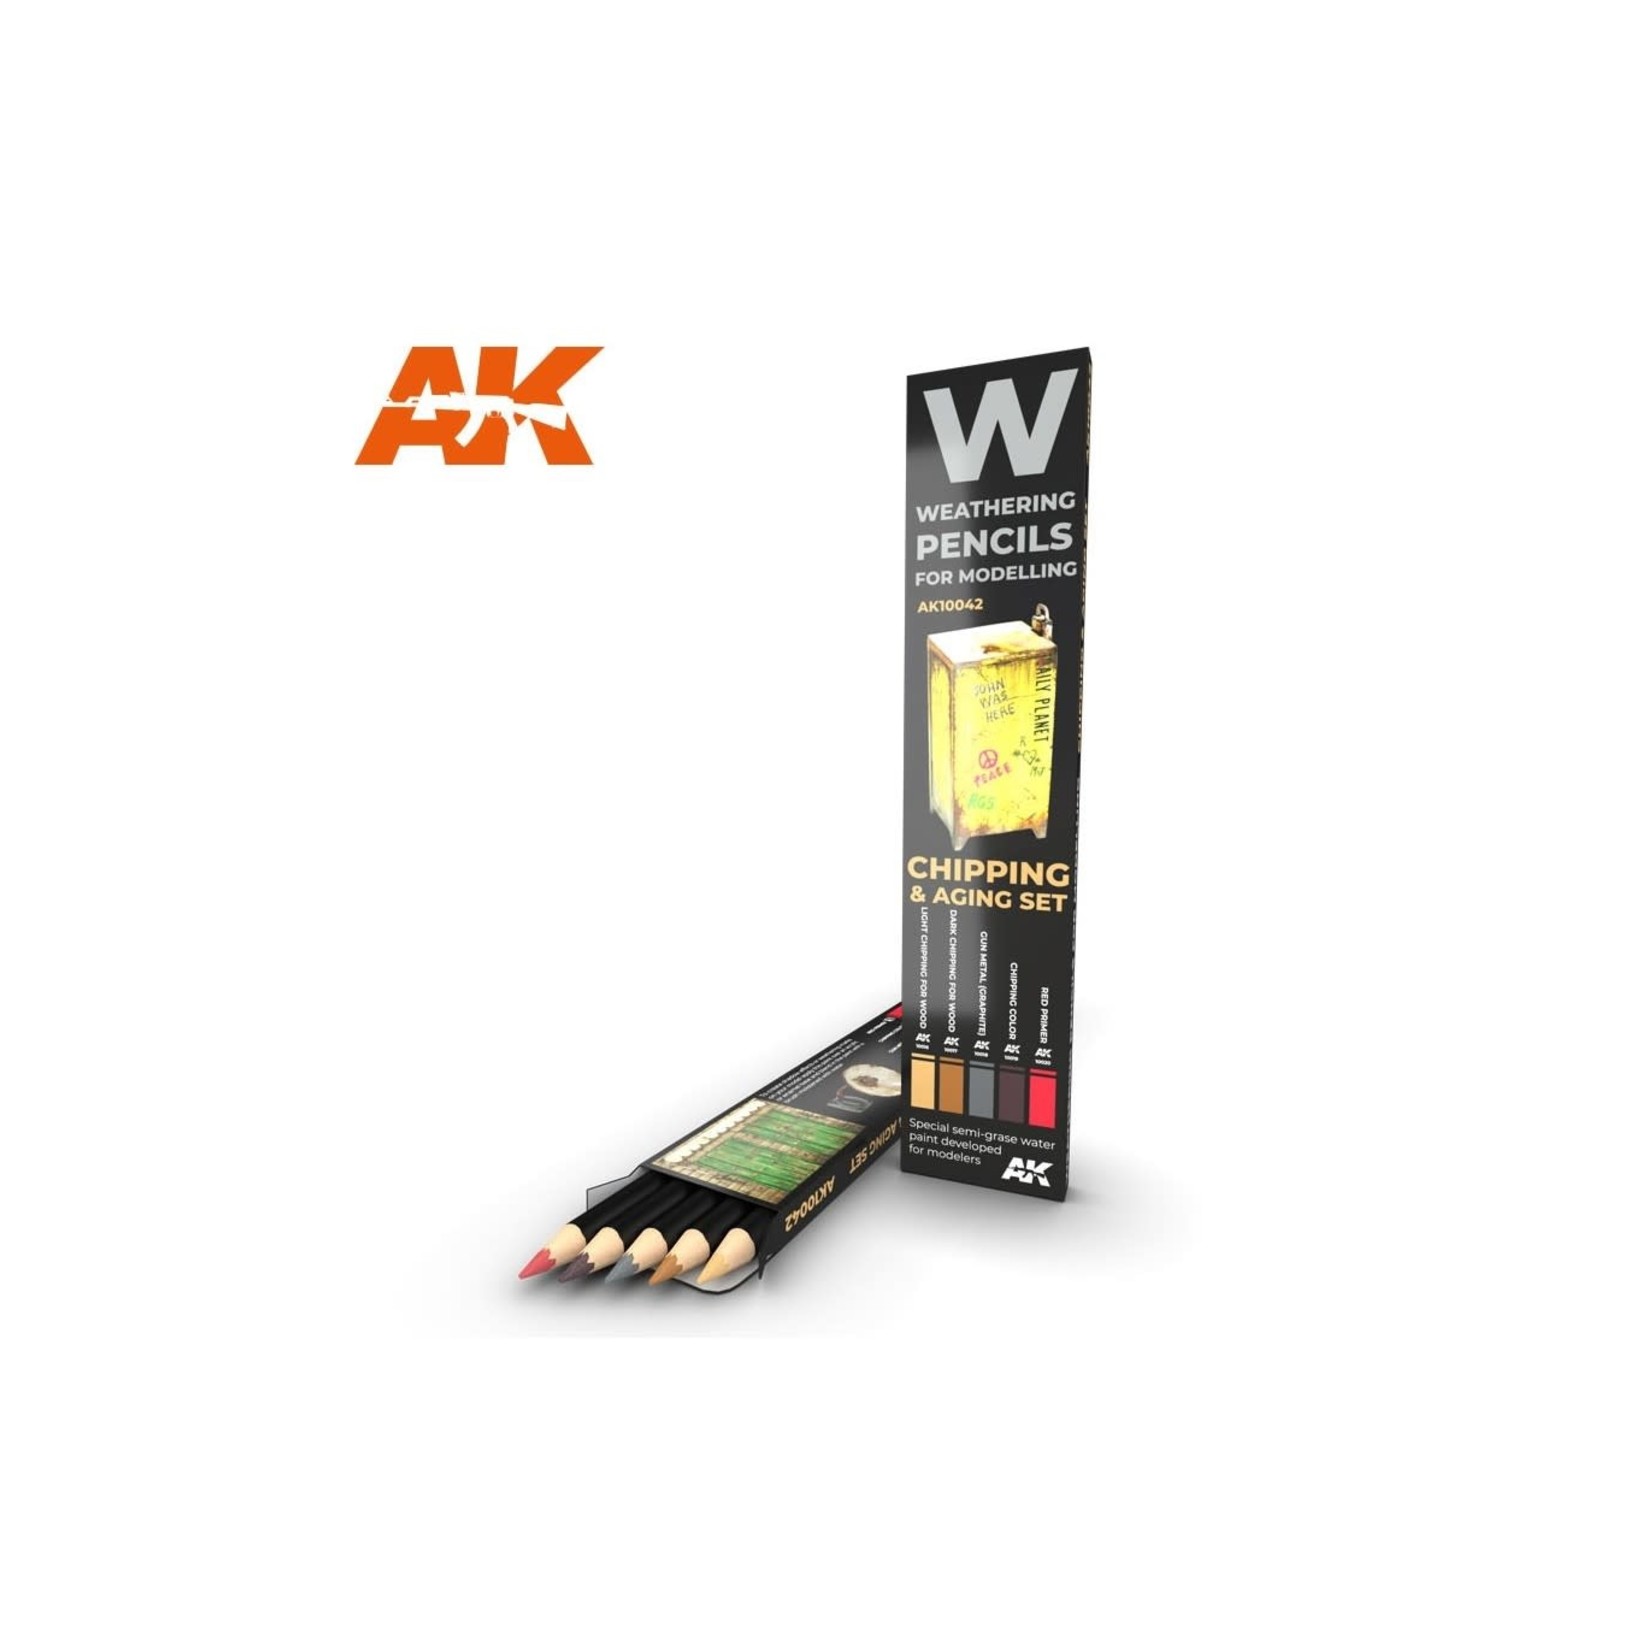 AK Interactive AK-10042 Chipping & Aging Set (5 pack)